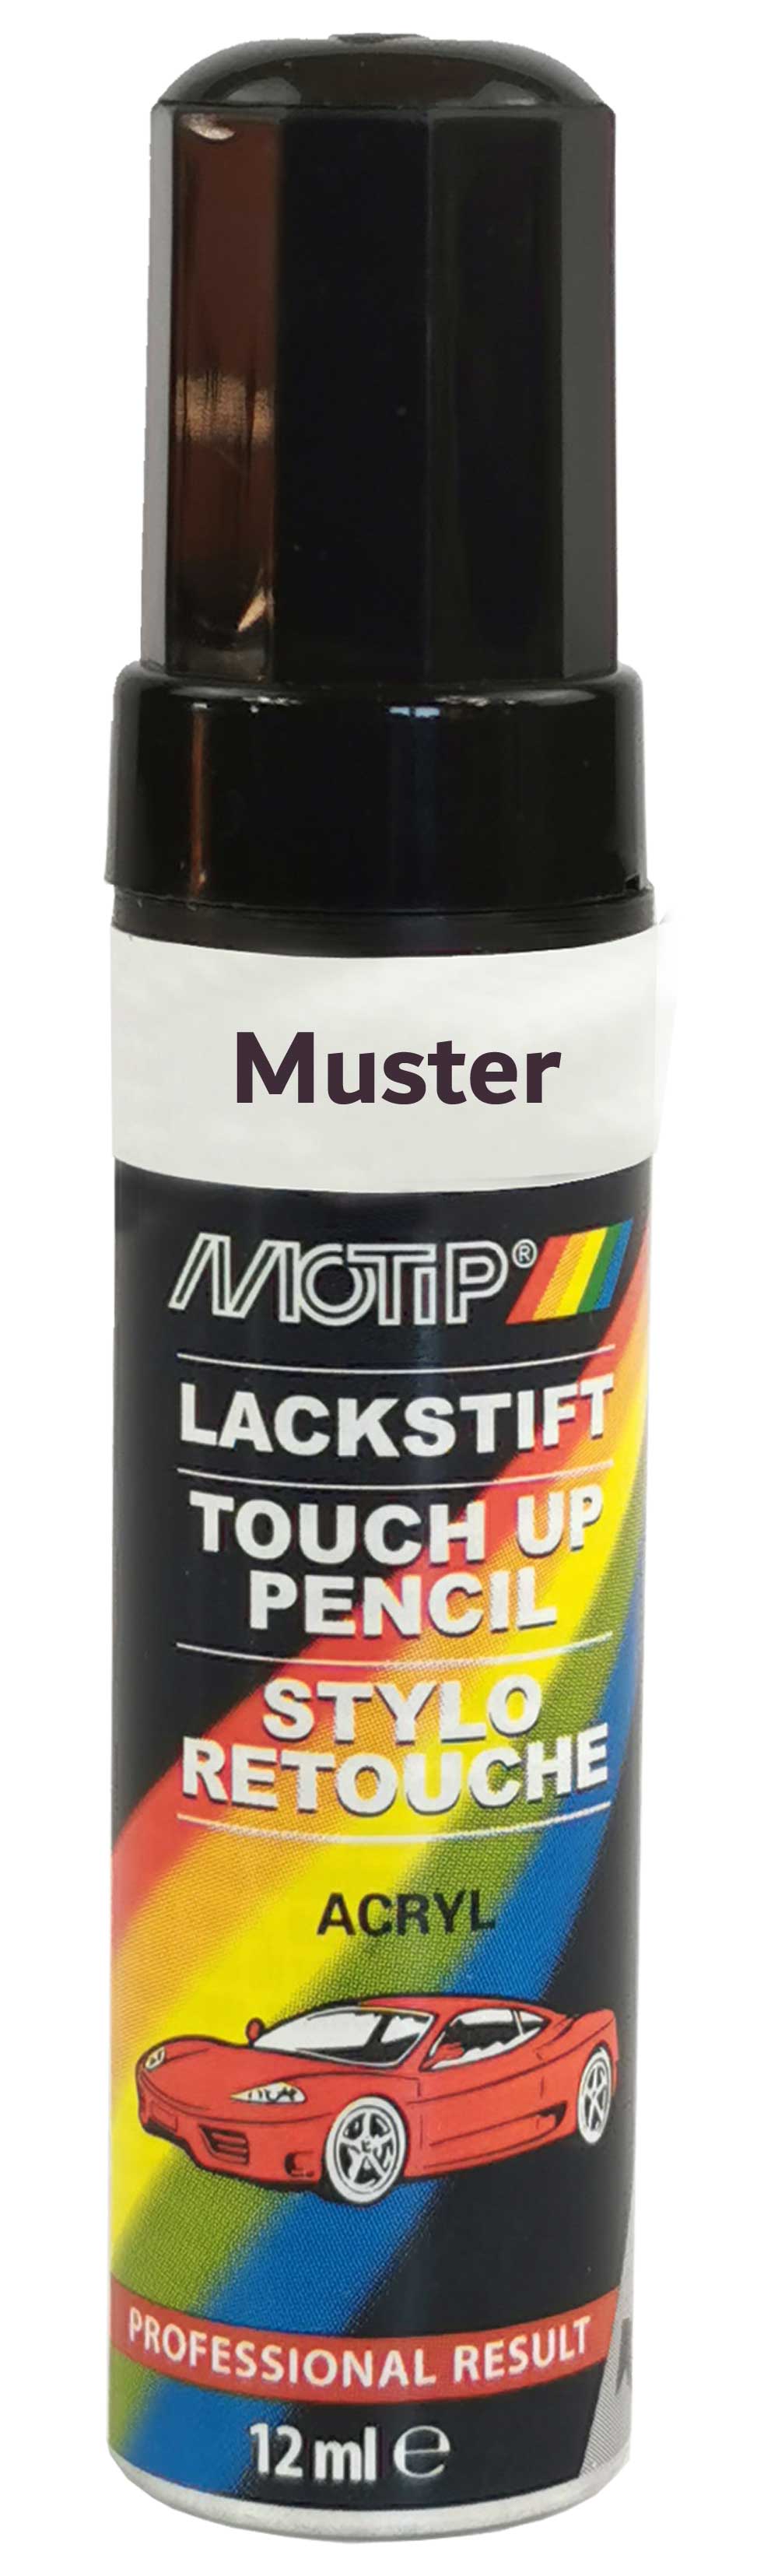 Motip Lack-Stift grau 12ml 951029